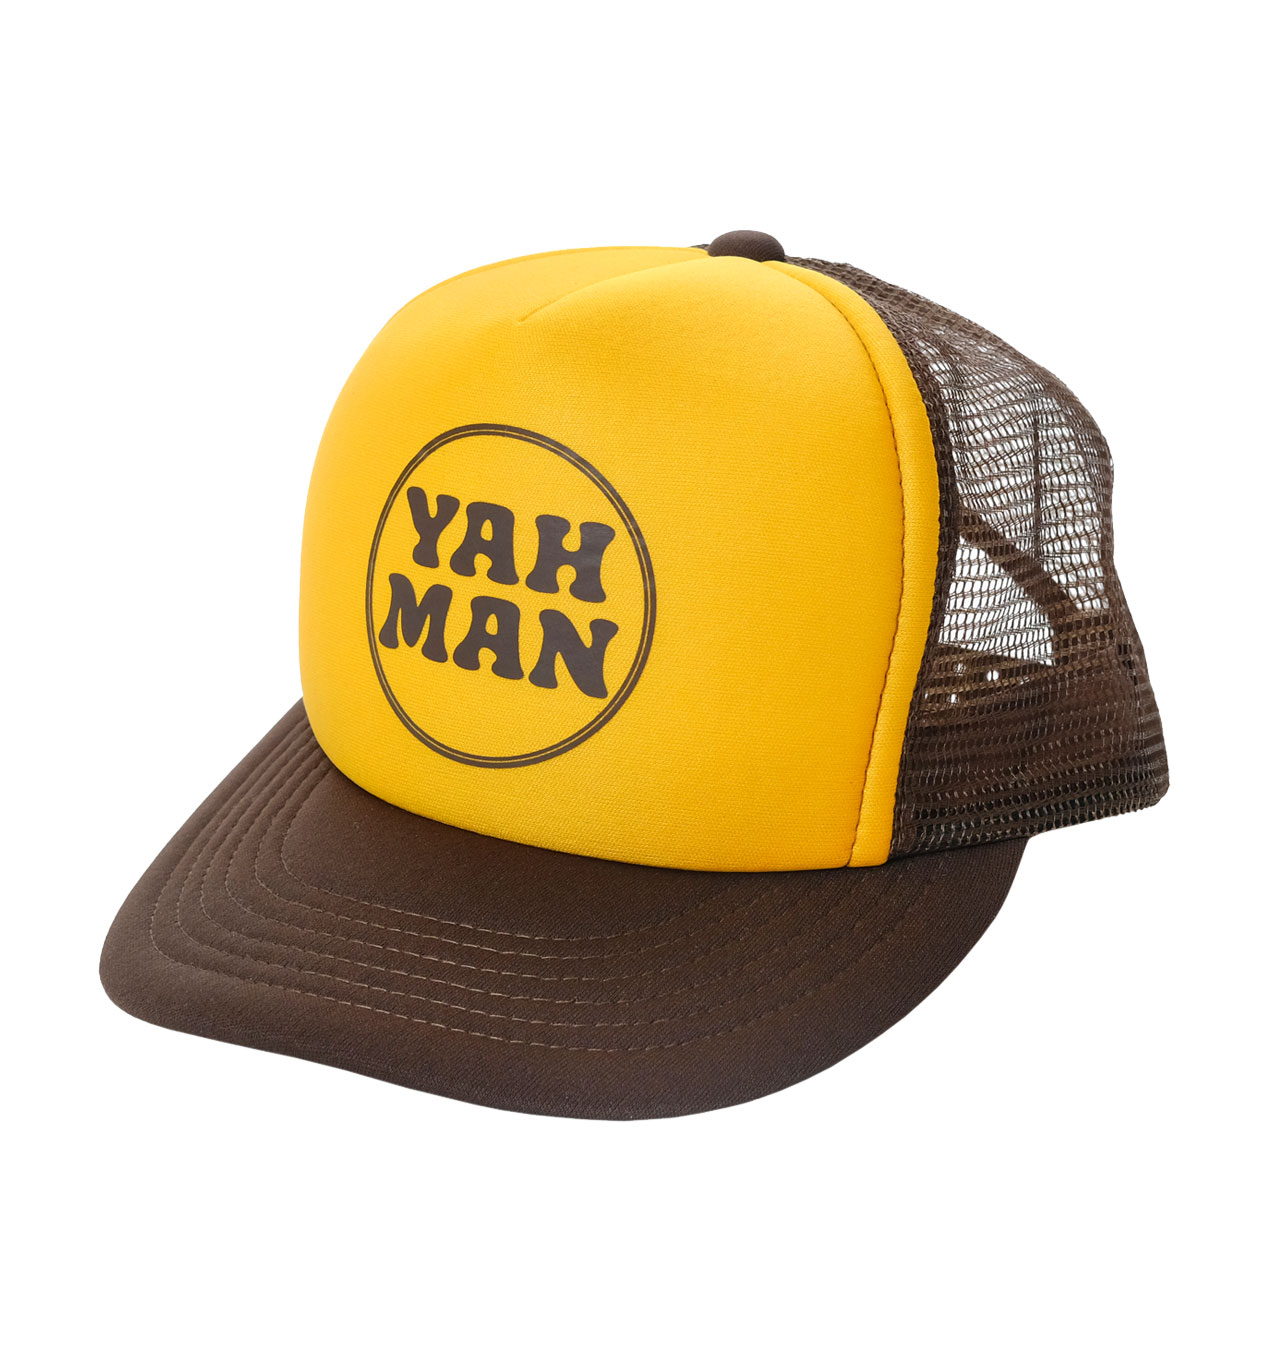 Eat Dust - Yah Man Trucker Cap - Brown/Yellow